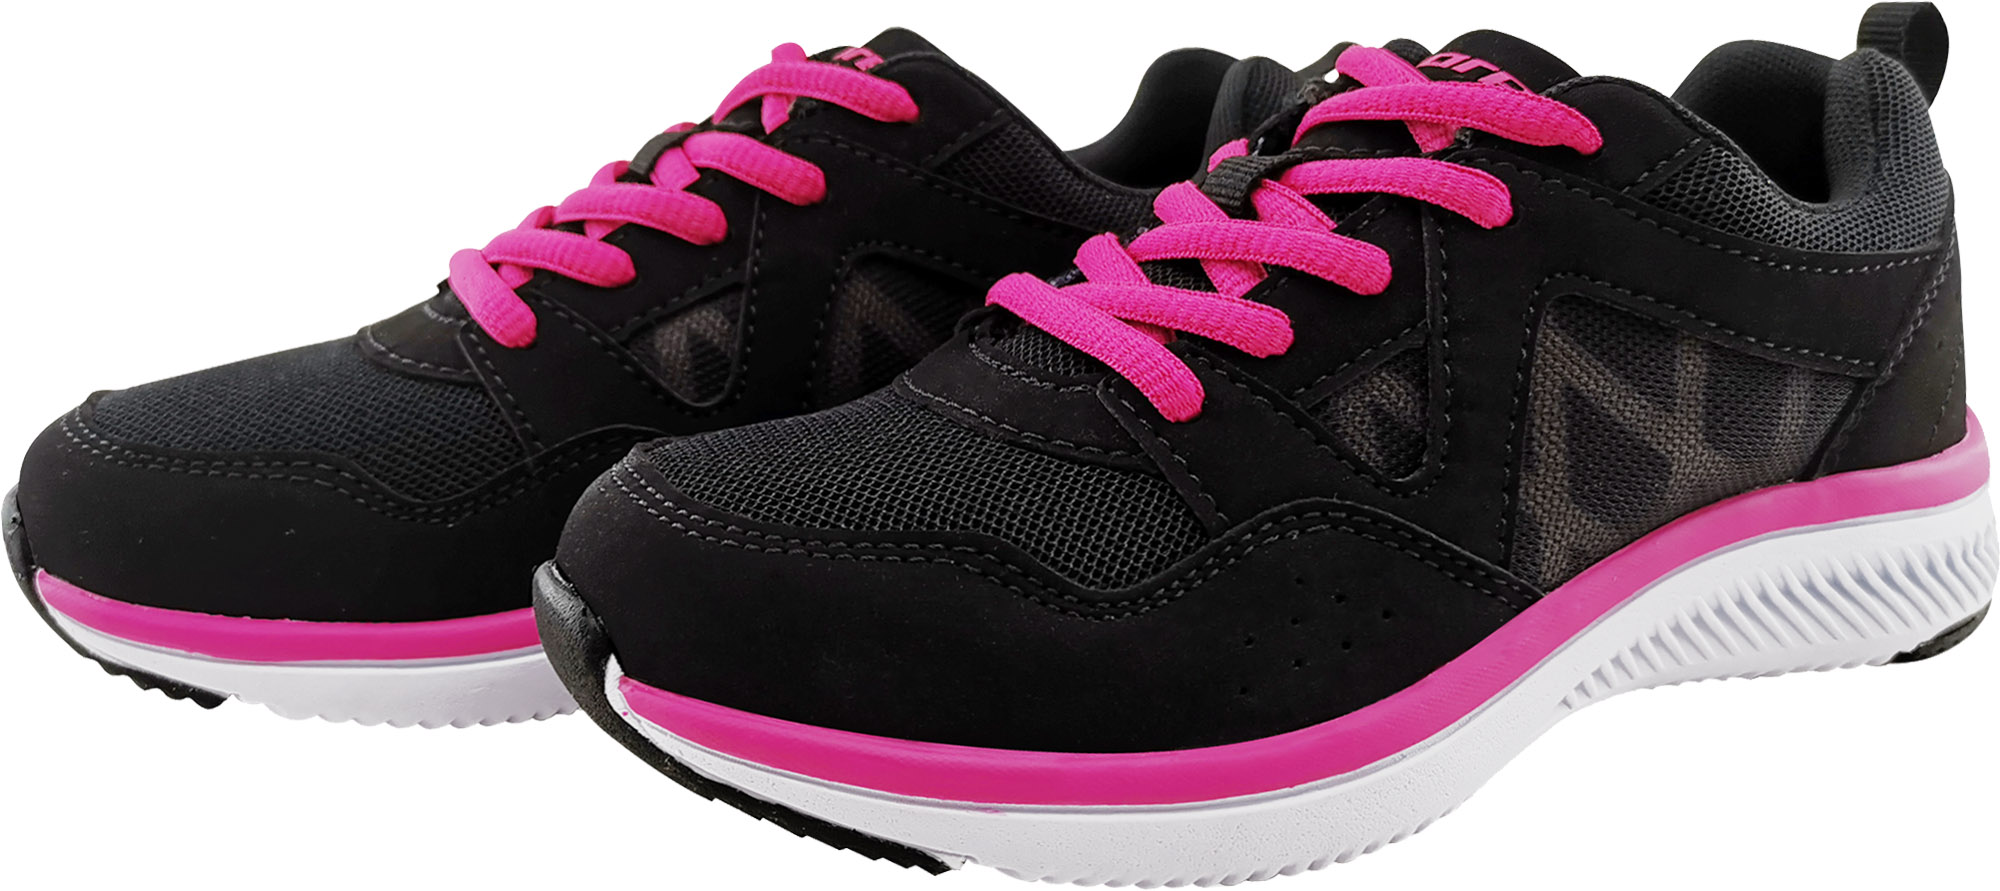 Girls’ running shoes